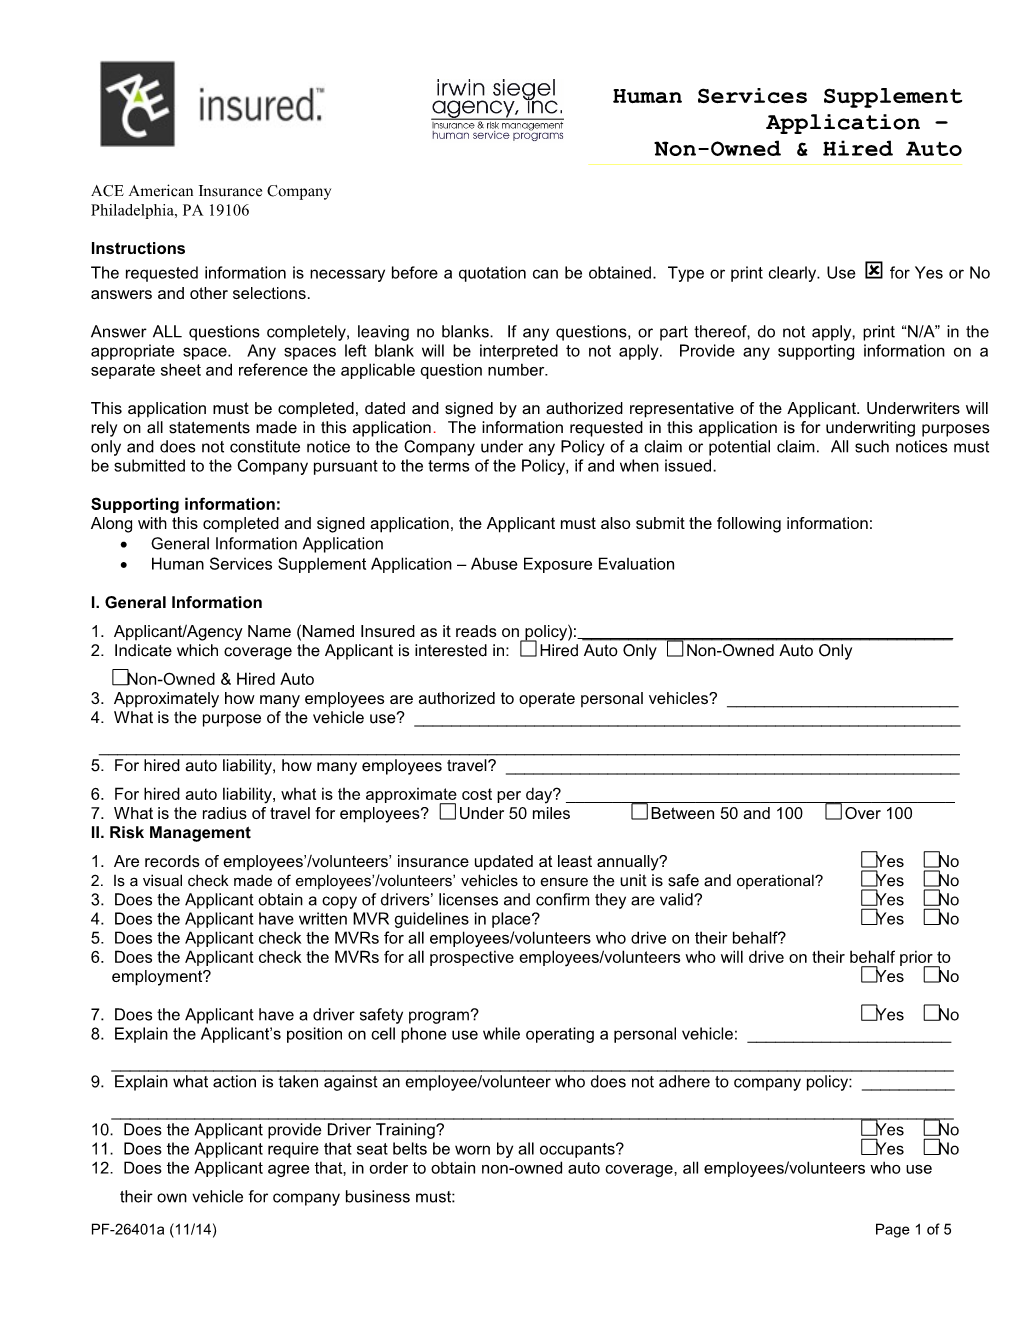 Pf26401a Human Services Supplement Application -Nonowned Auto-Warrants